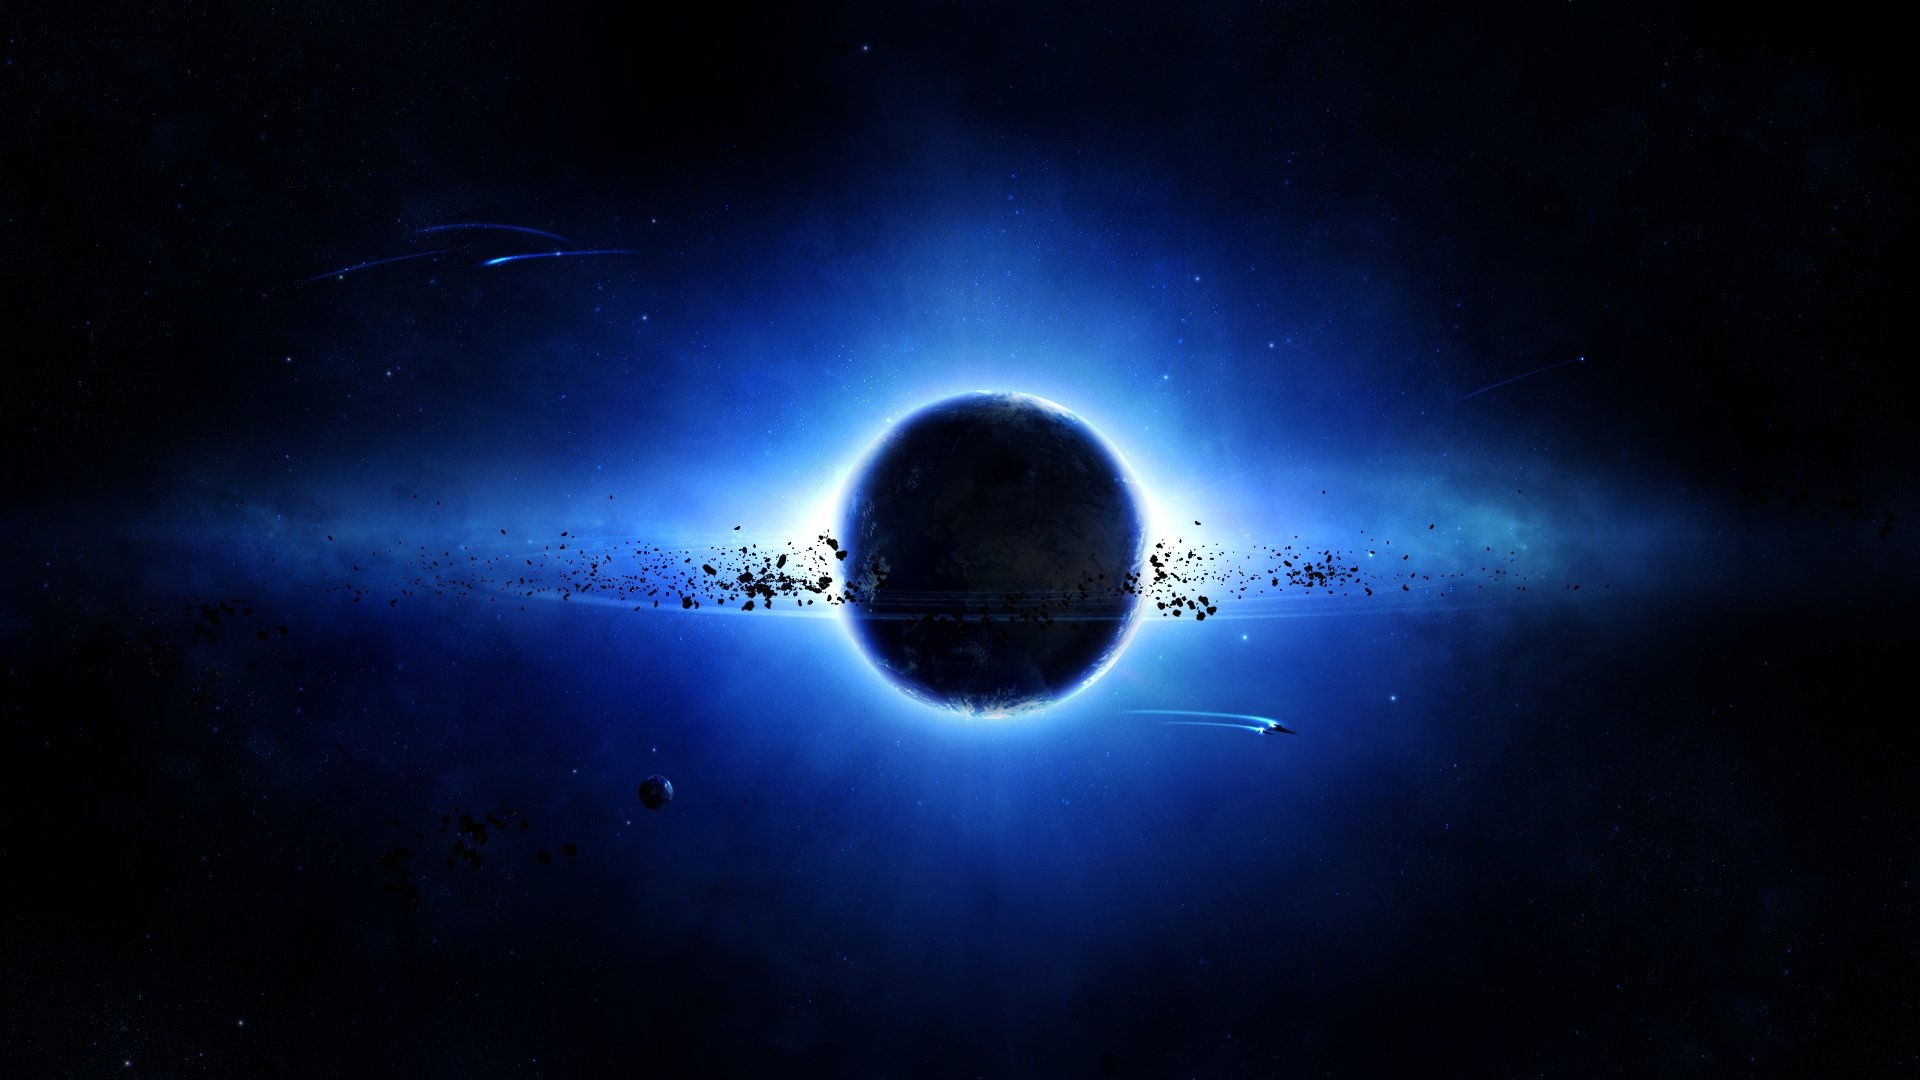 Black Planet desktop wallpaper free download